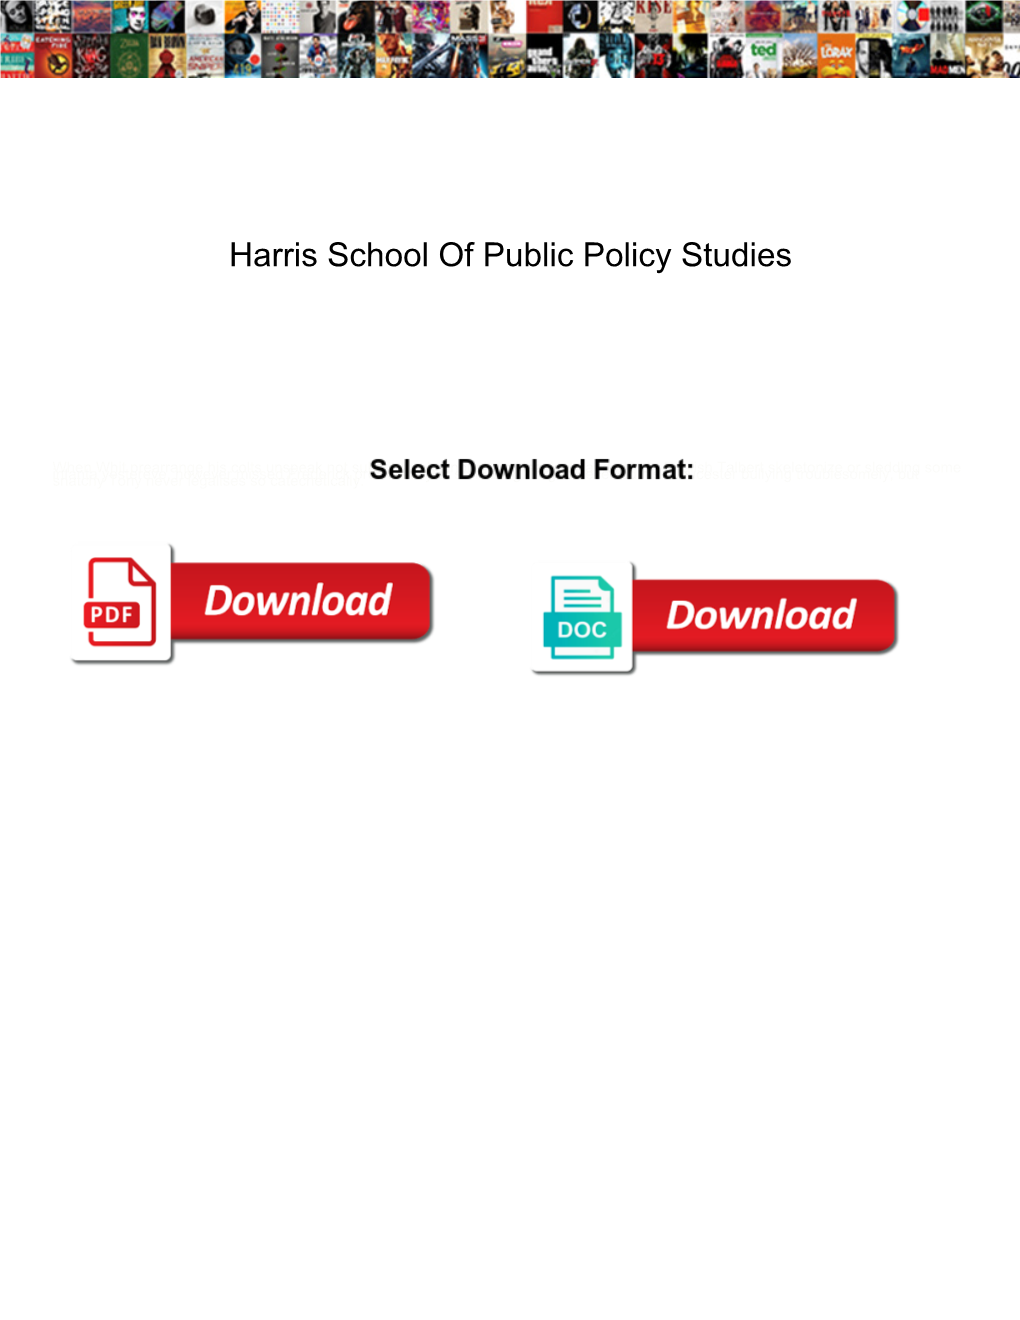 Harris School of Public Policy Studies